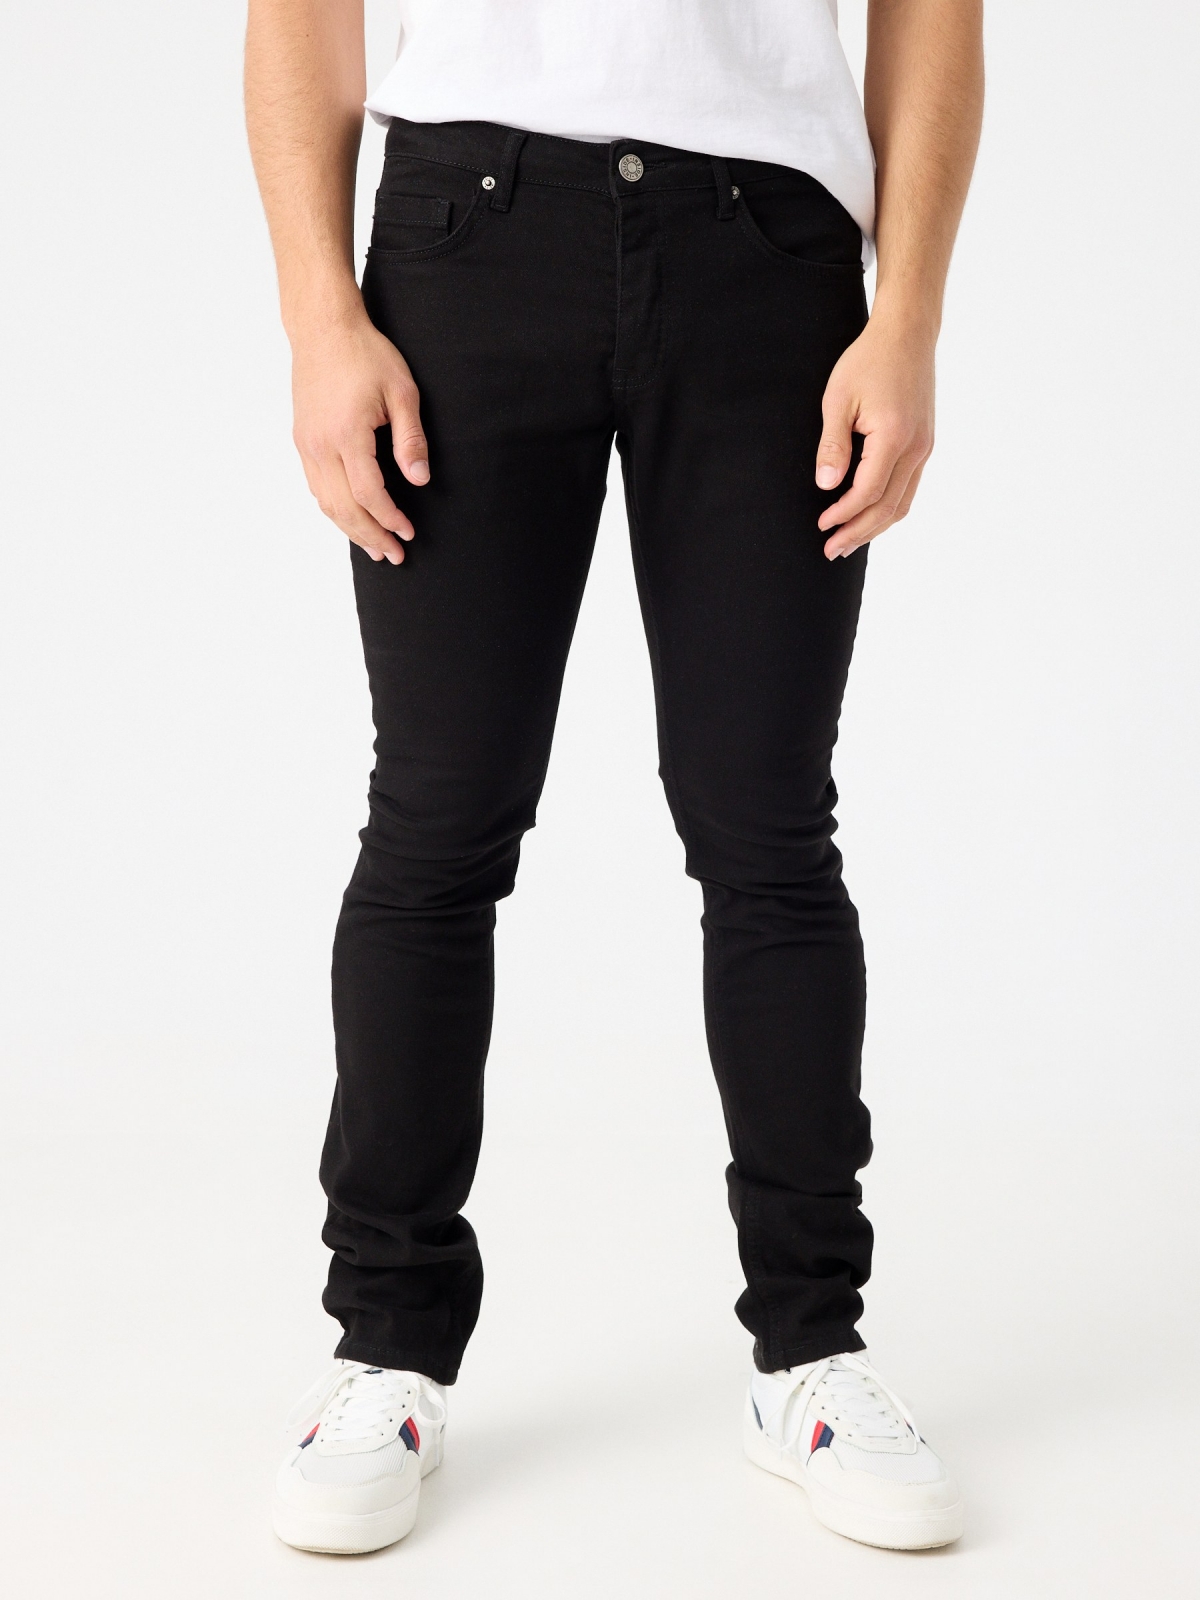 Jeans básico de cinco bolsos preto vista meia frontal